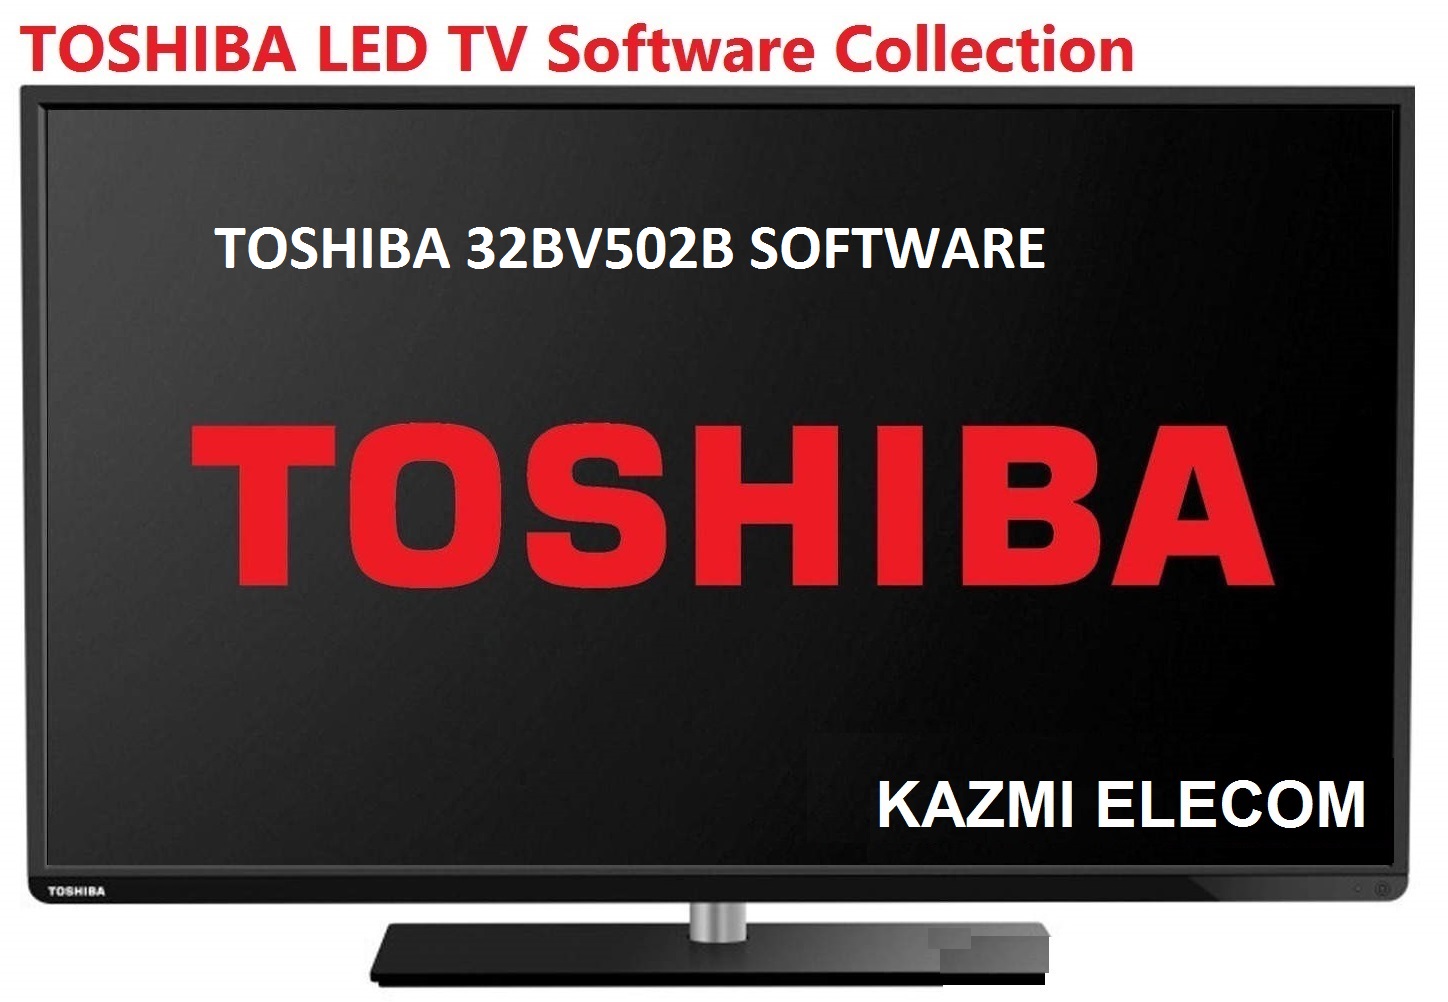 Toshiba 32Bv502B